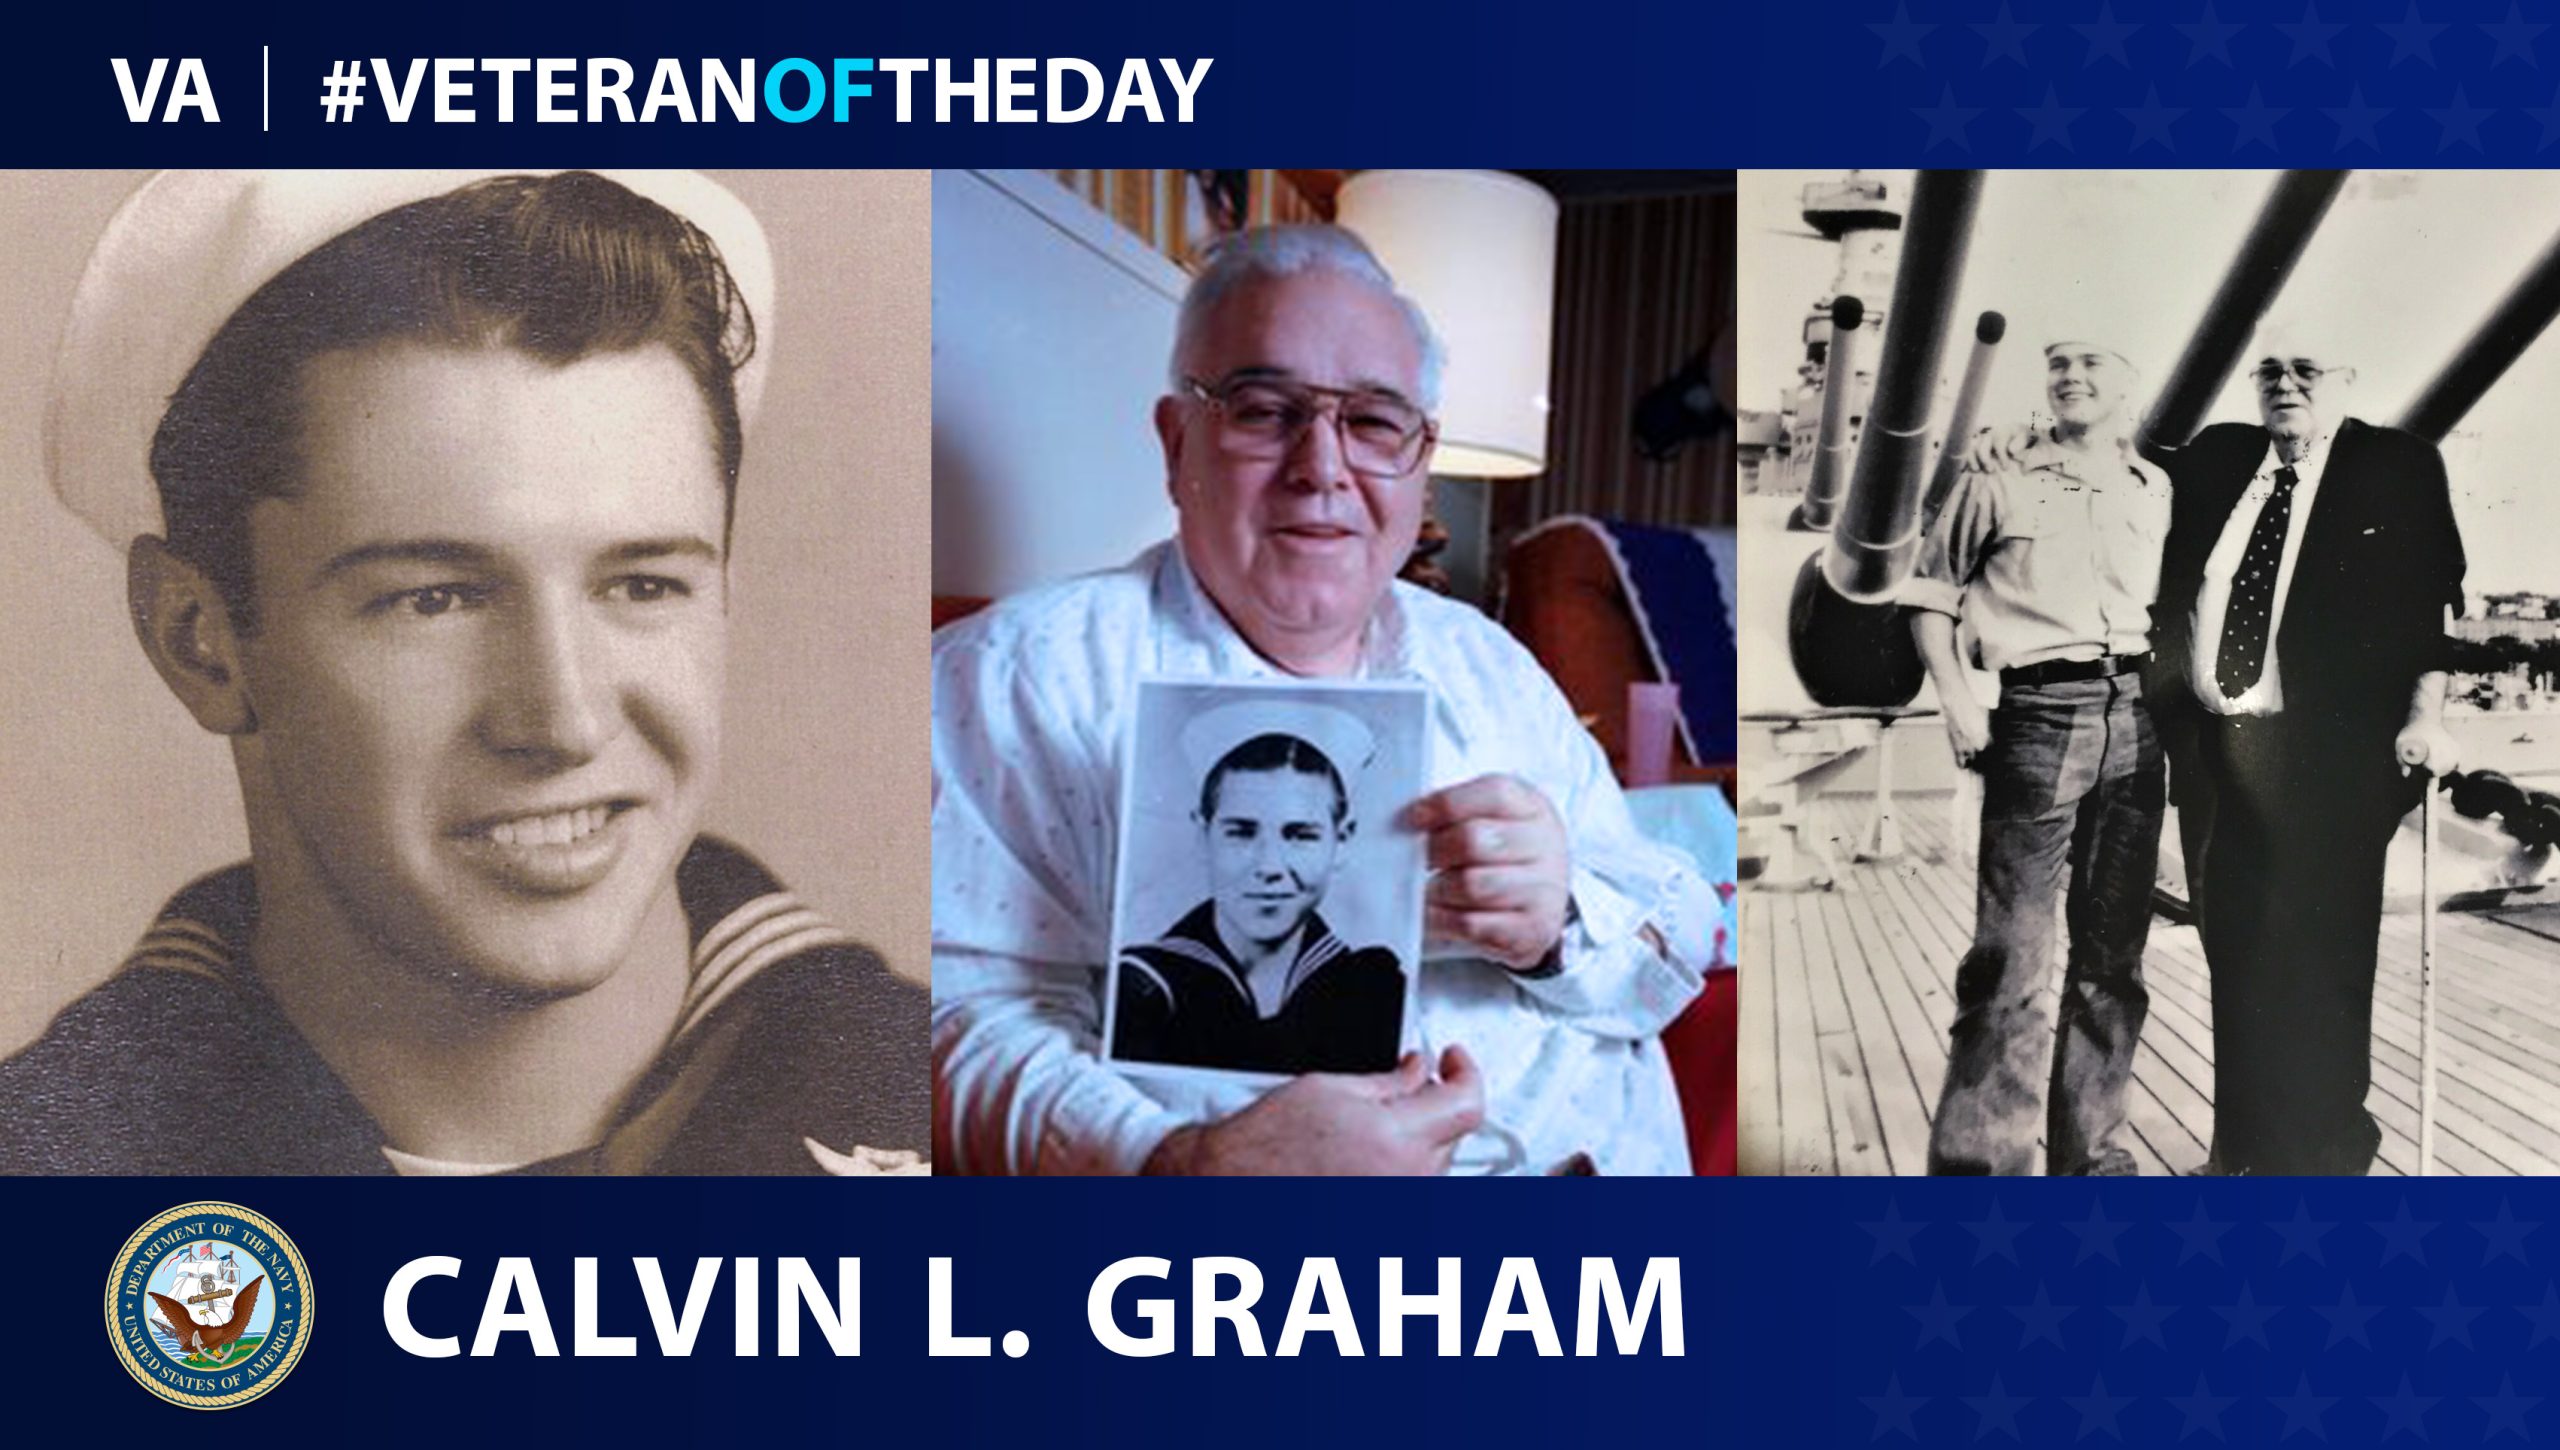 Navy Veteran Calvin L. Graham is today’s Veteran of the Day.